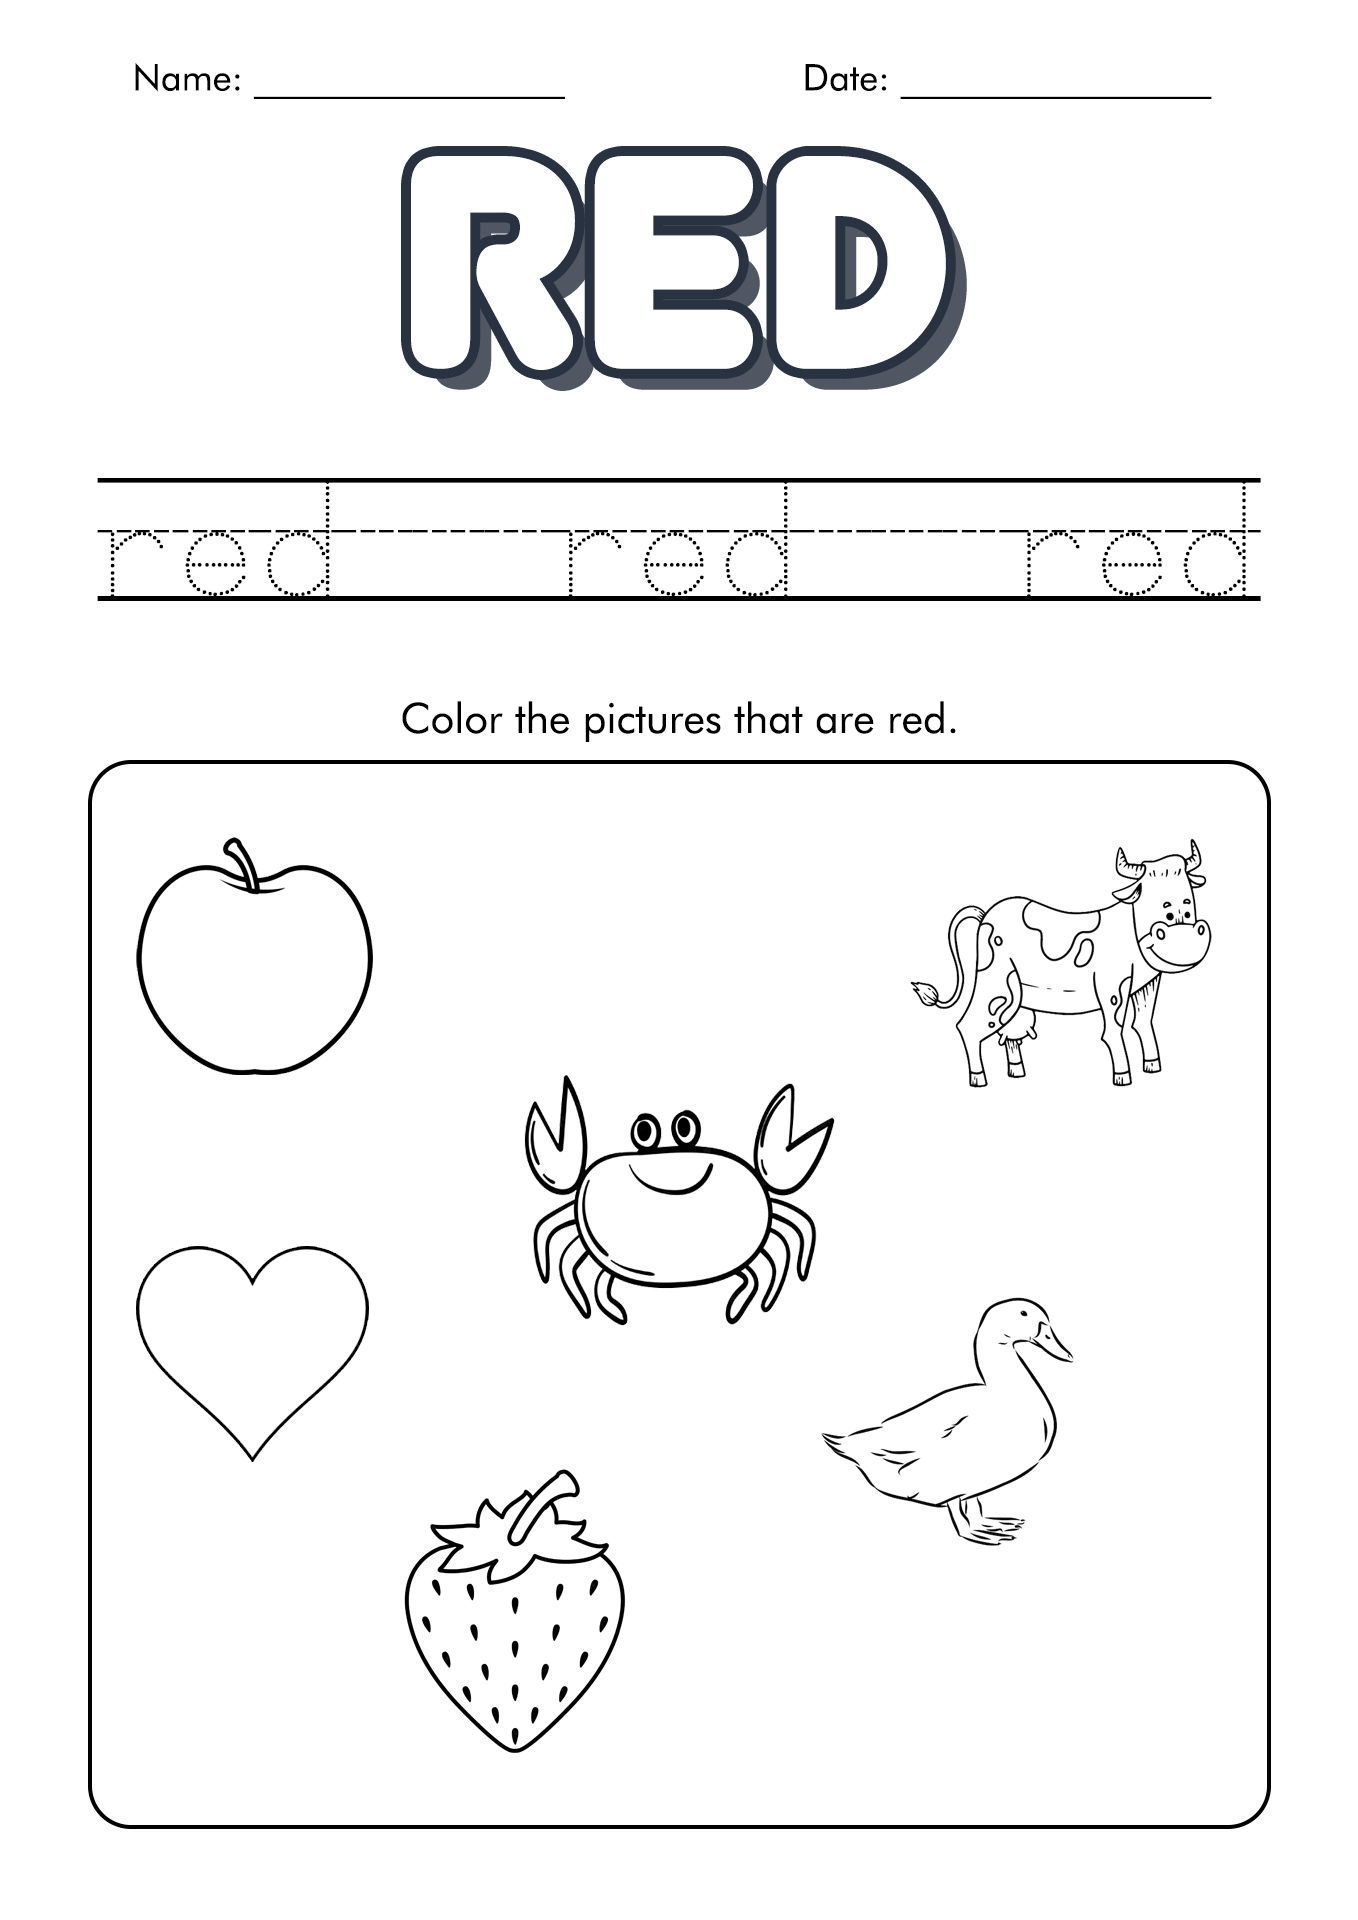 10 Best Images of Red Color Worksheets Printable - Color Red Worksheets